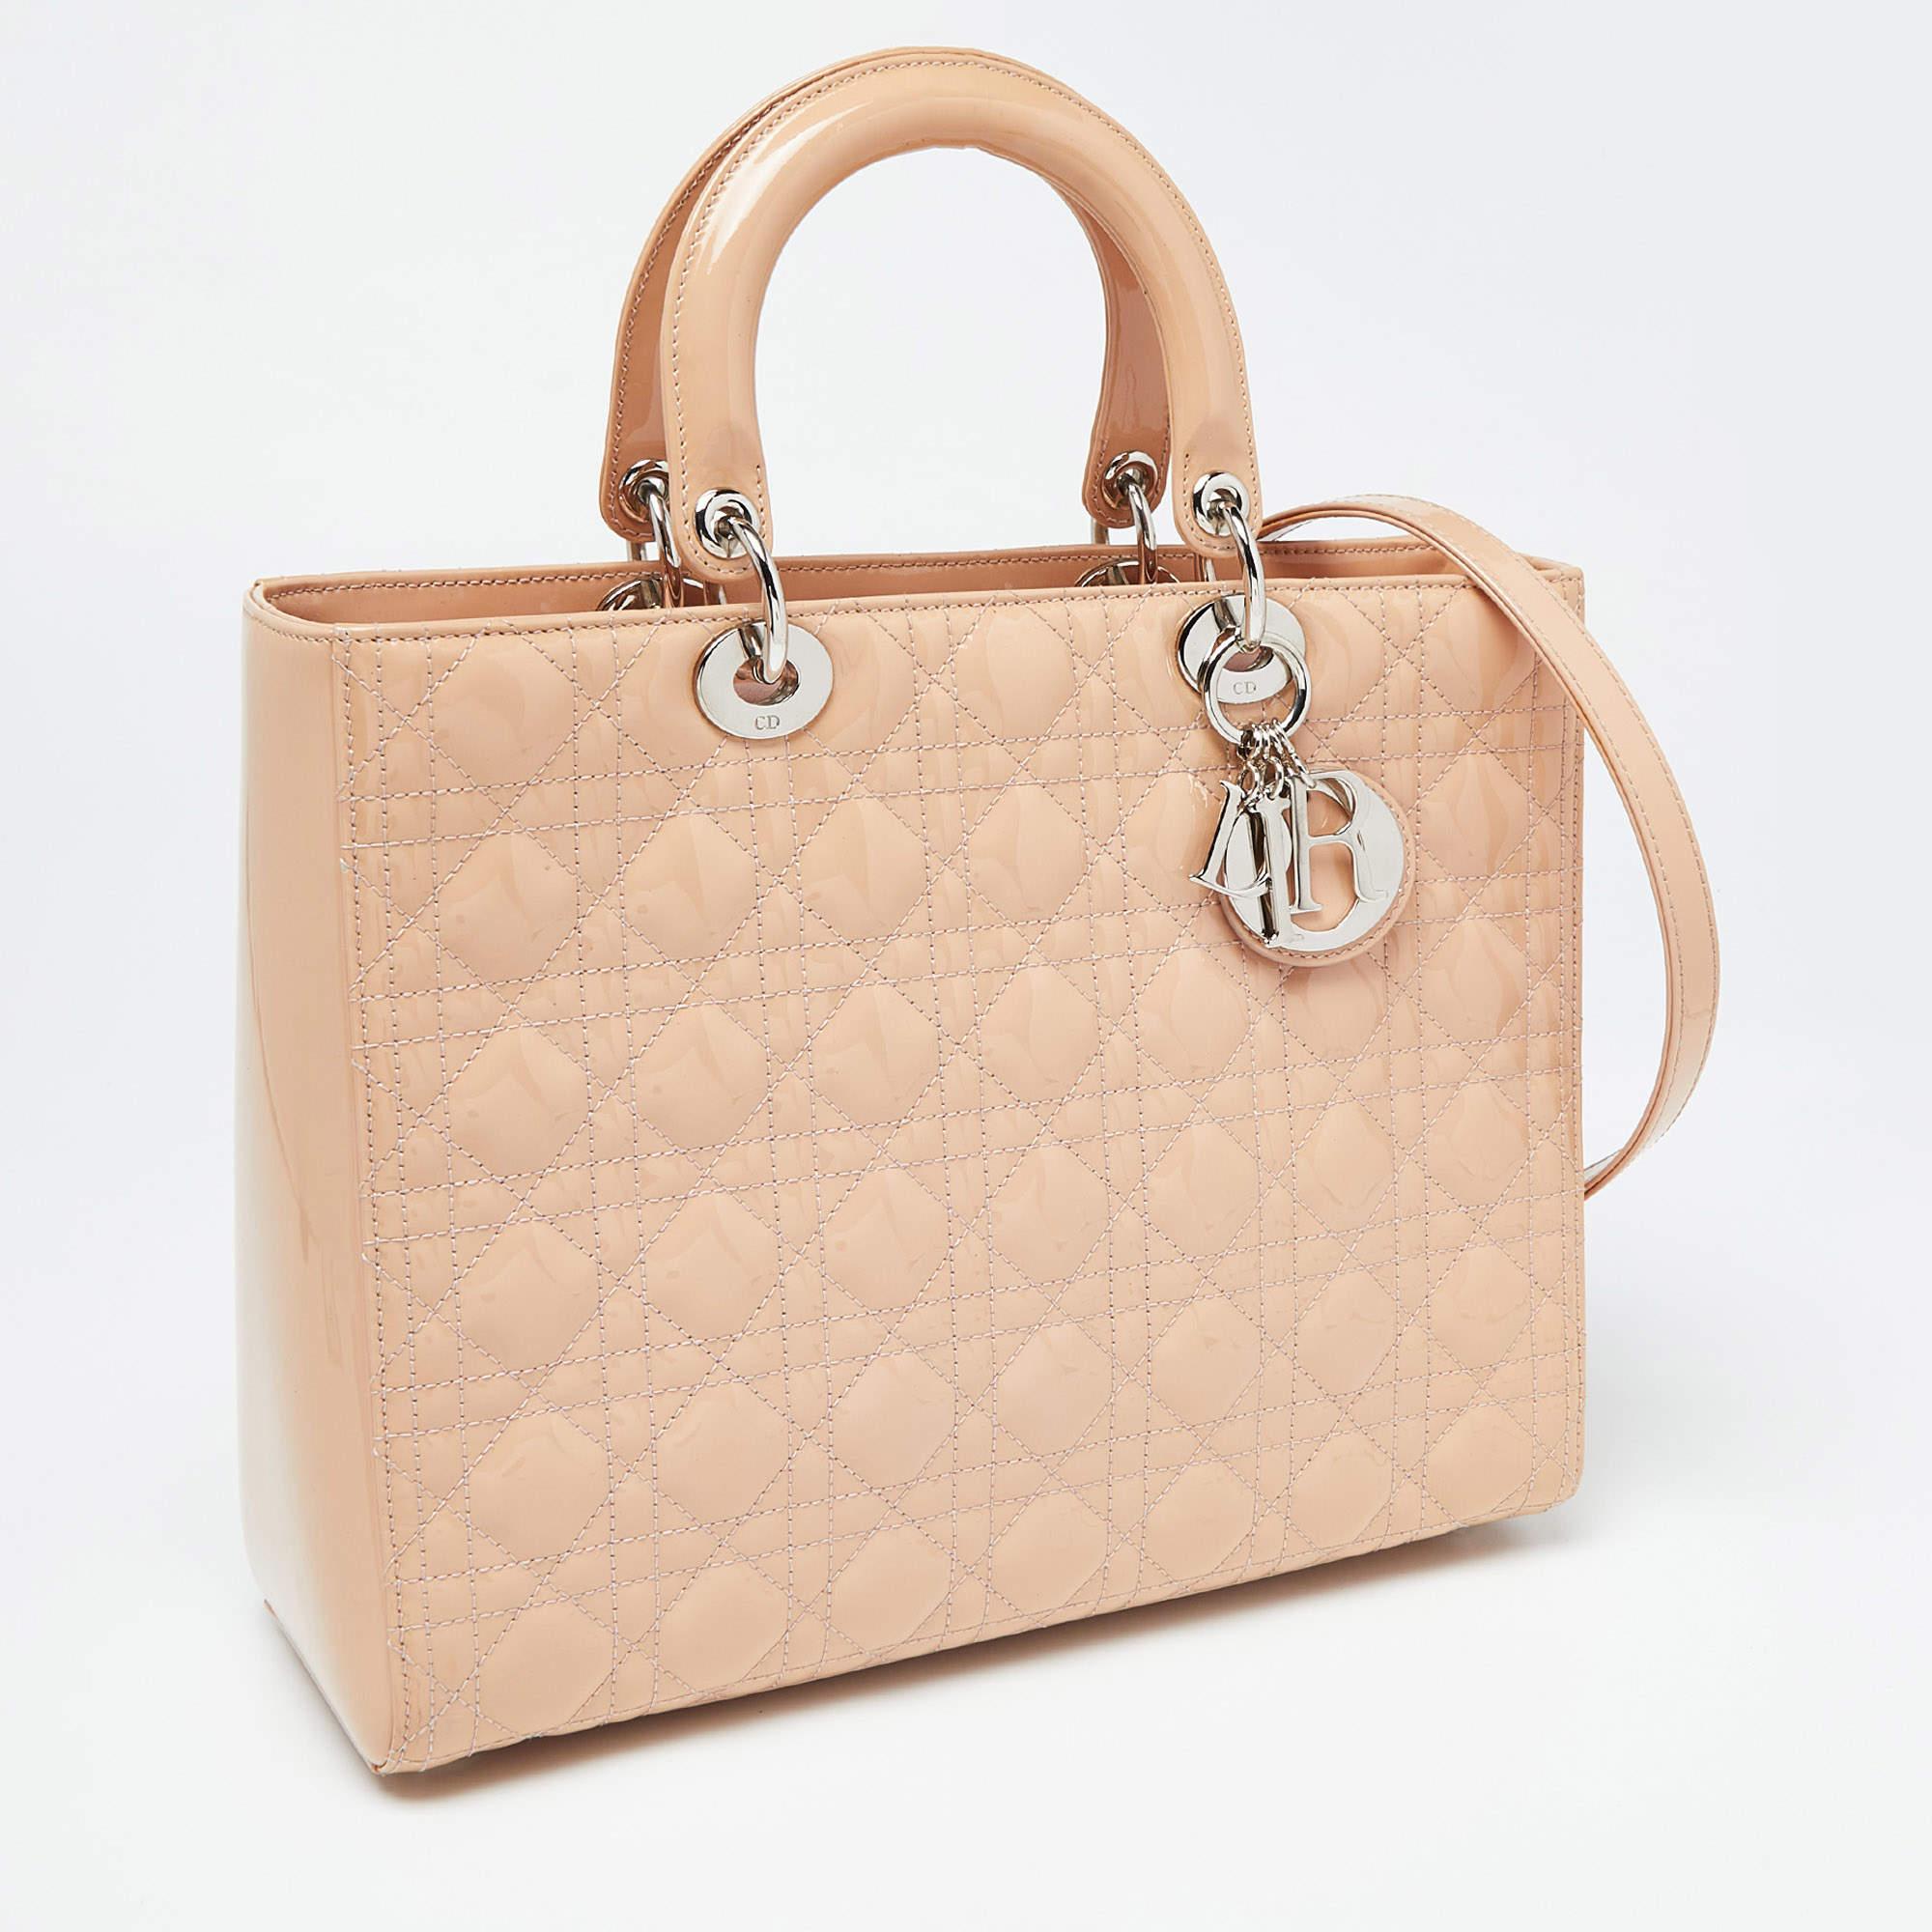  Dior grand sac cabas Lady Dior en cuir verni beige cannage Pour femmes 